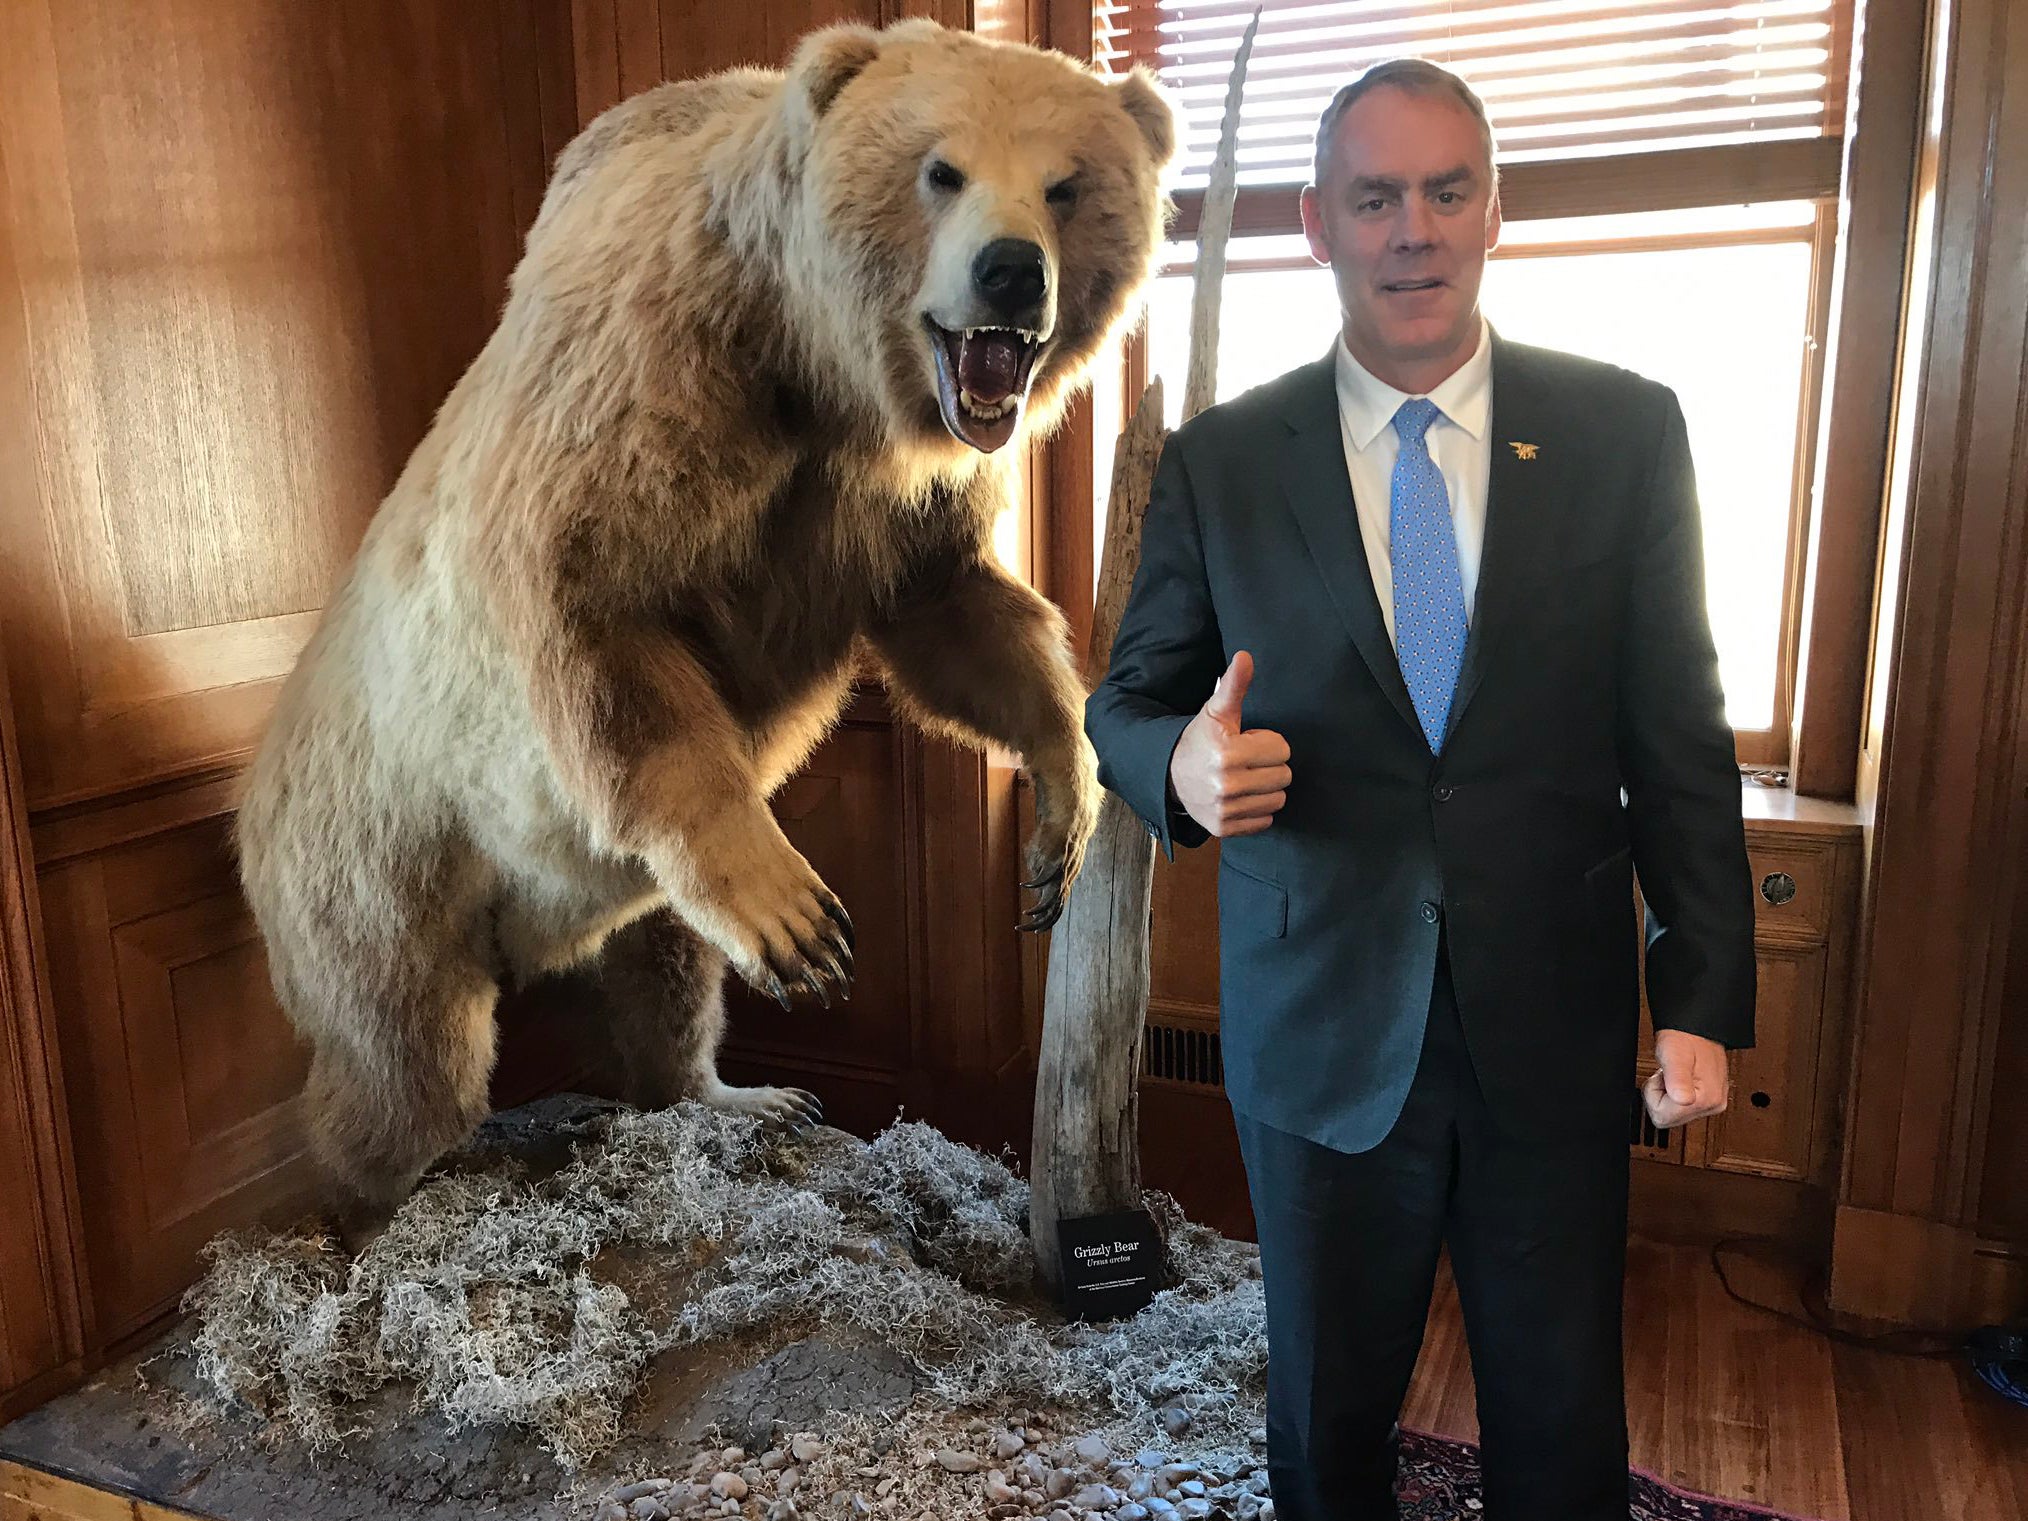 US interior secretary Ryan Zinke poses alongside a taxidermied grizzly bear